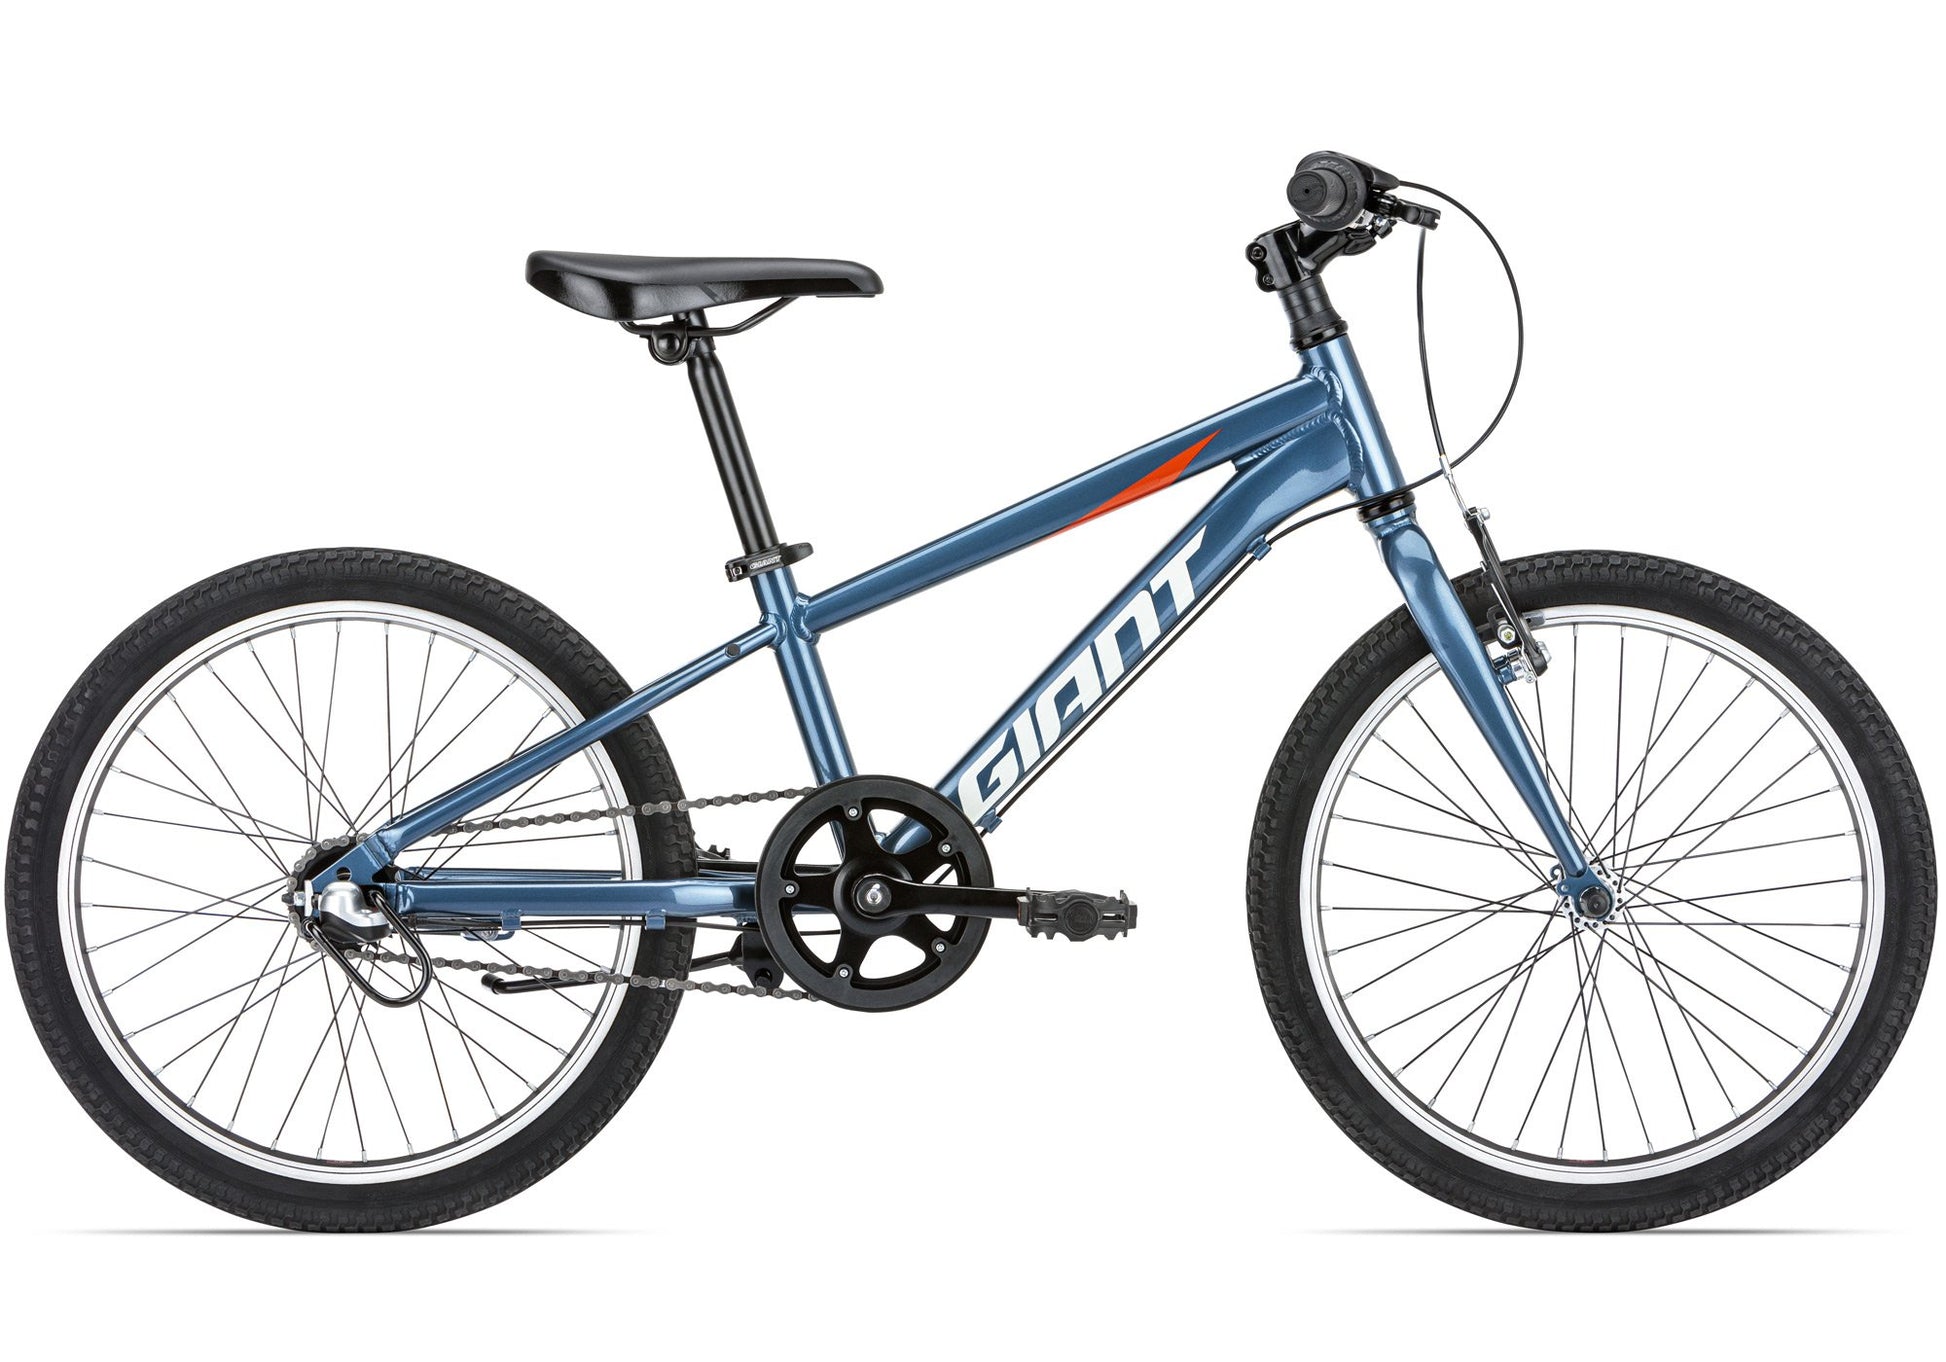 2022 Giant XTC Jr Street 20", Childrens Bike, Blue Ashes buy online at Woolys Wheels bike shop Sydney